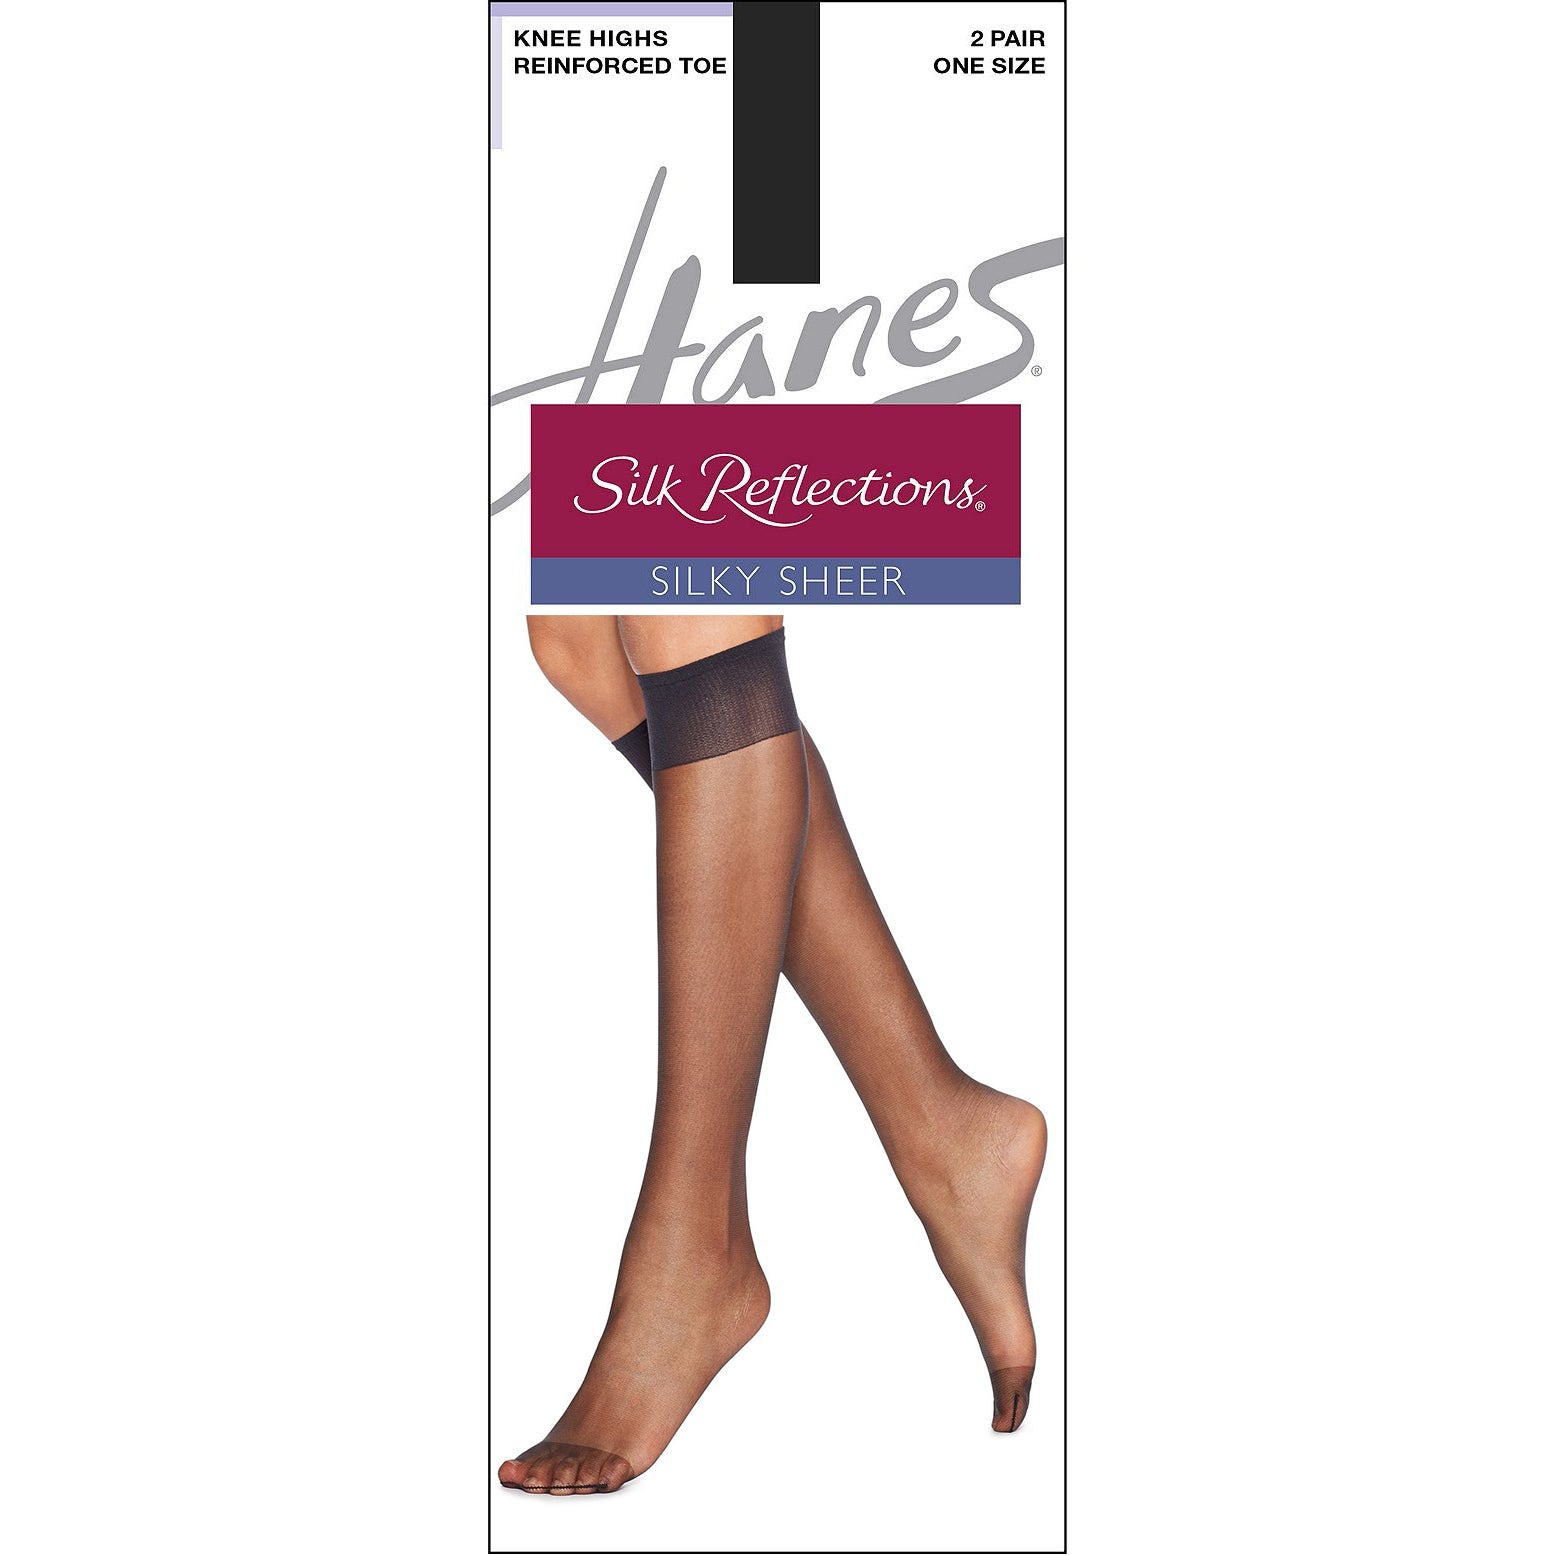 Hanes Silk Reflections Knee Highs Reinforced Toe 00775 2-pair pack